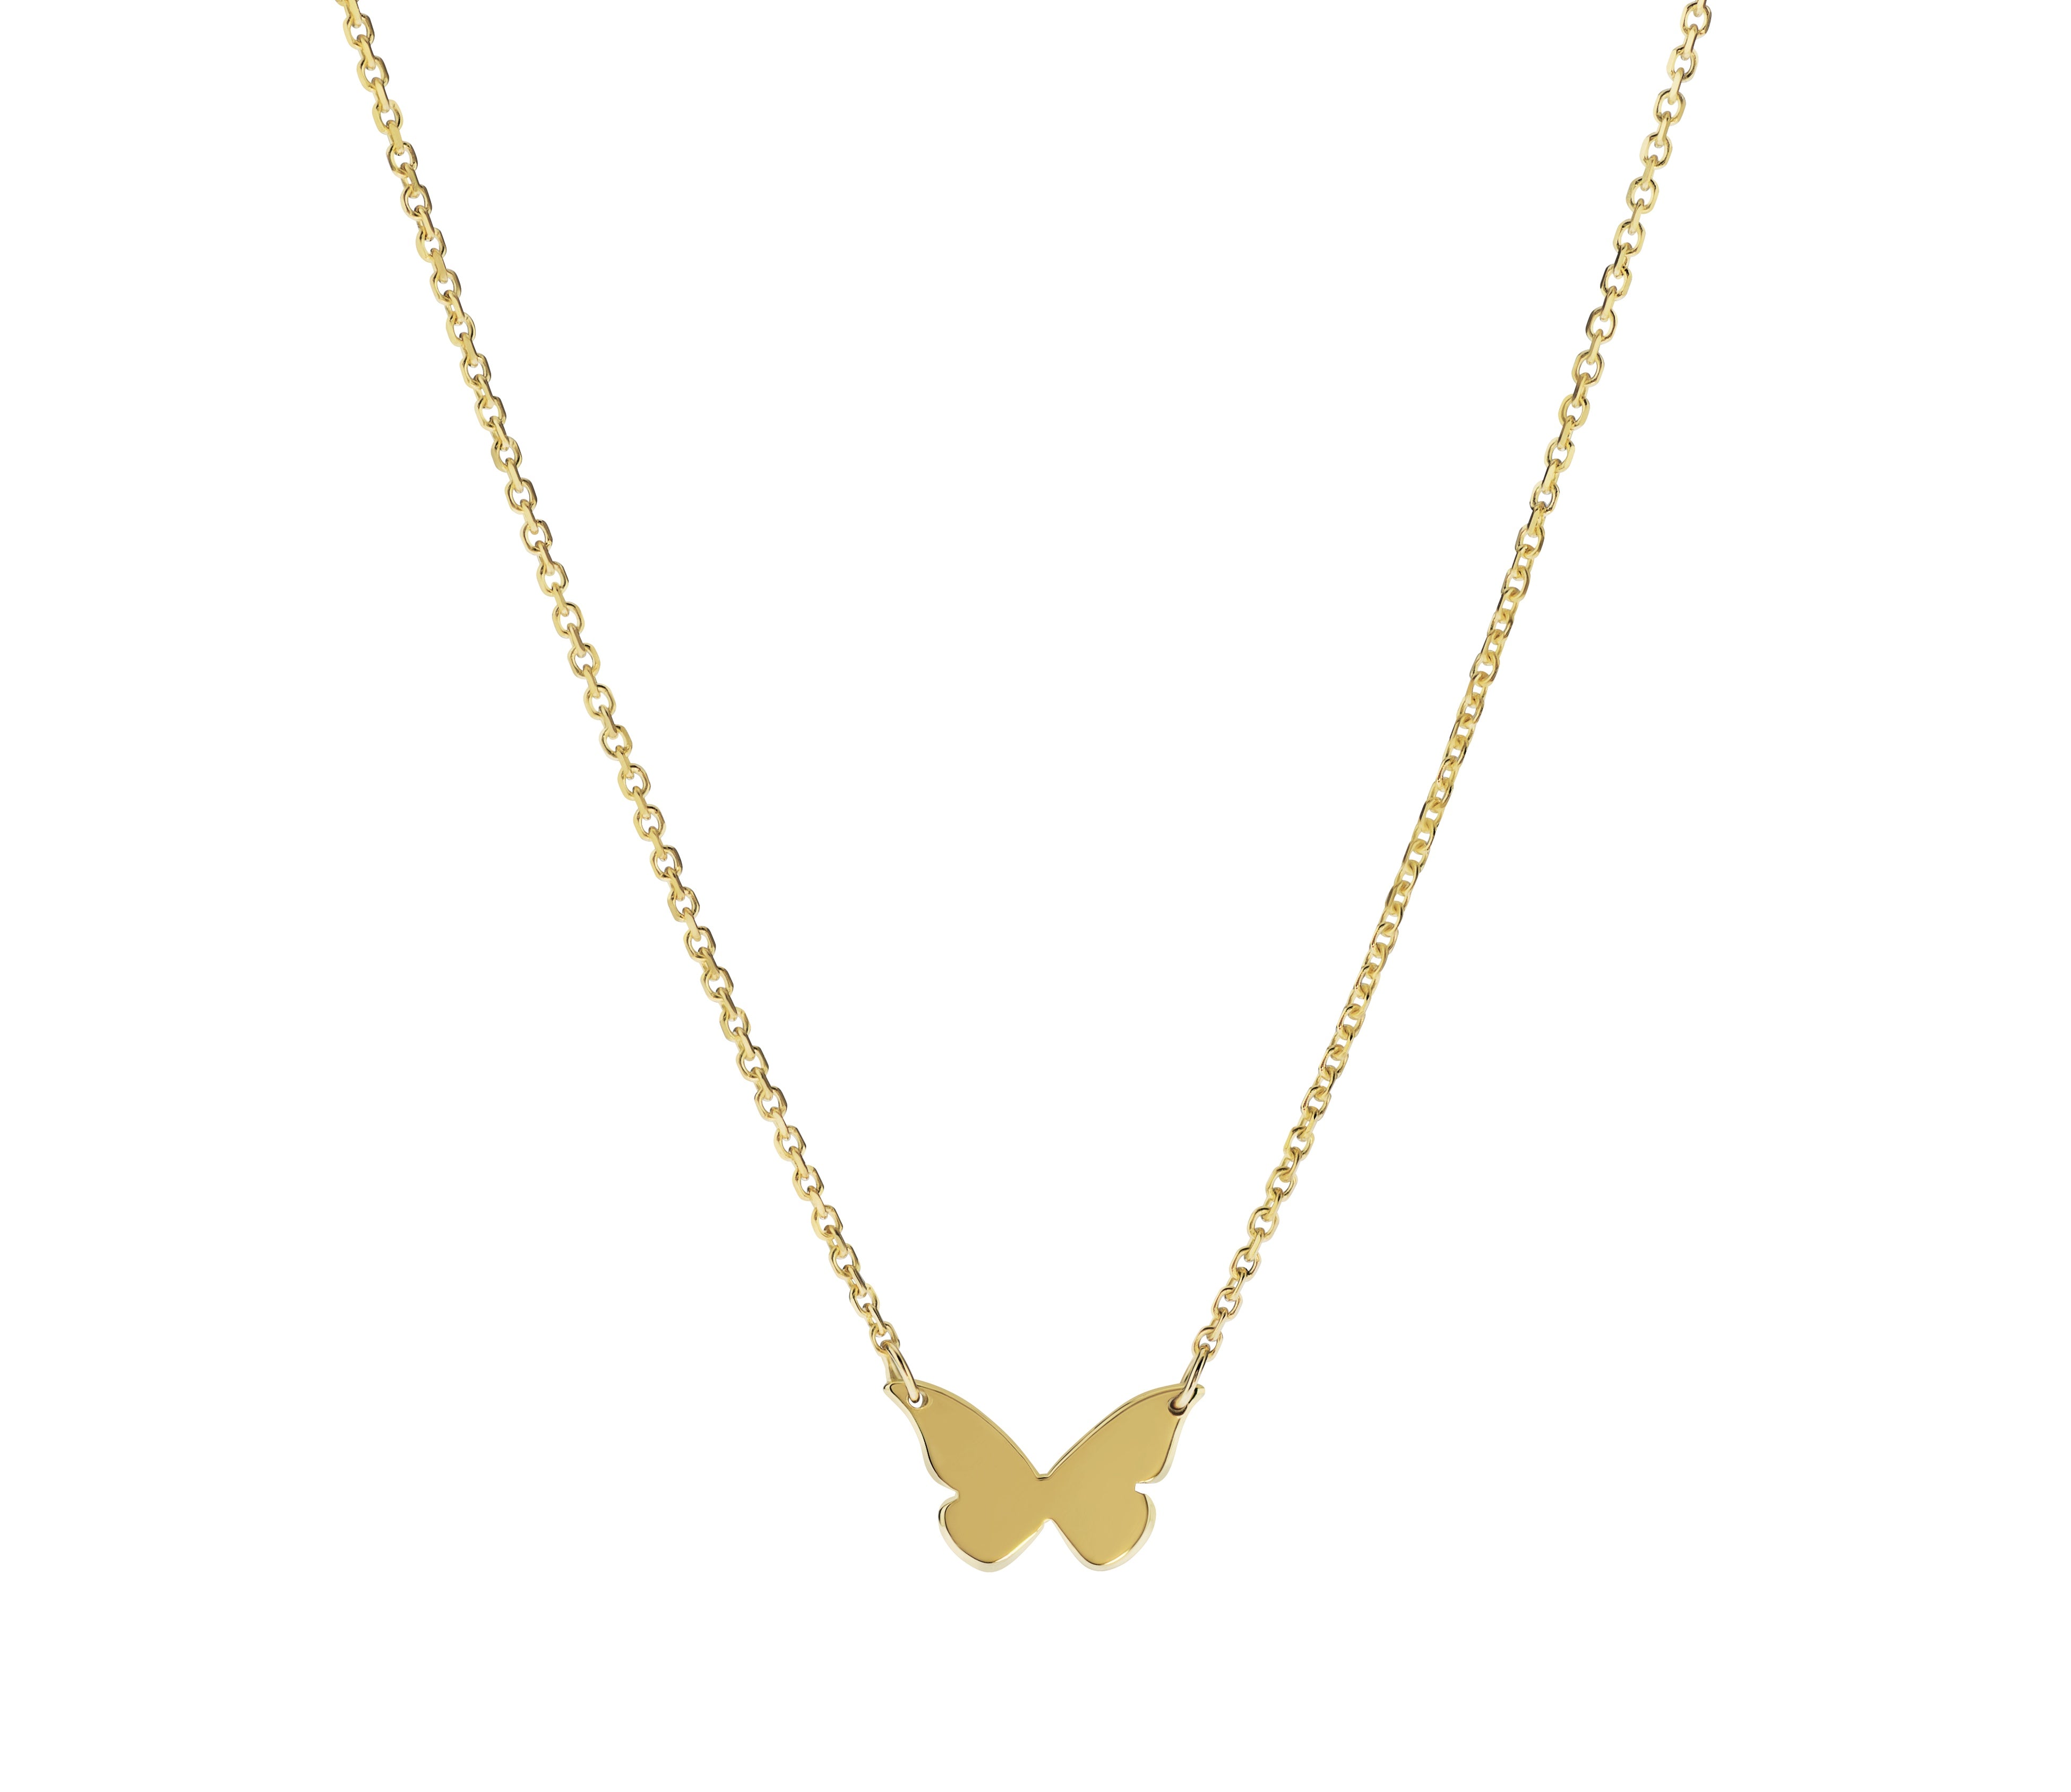 Flutter- 14K Gold Butterfly Necklace- Lola James Jewelry 